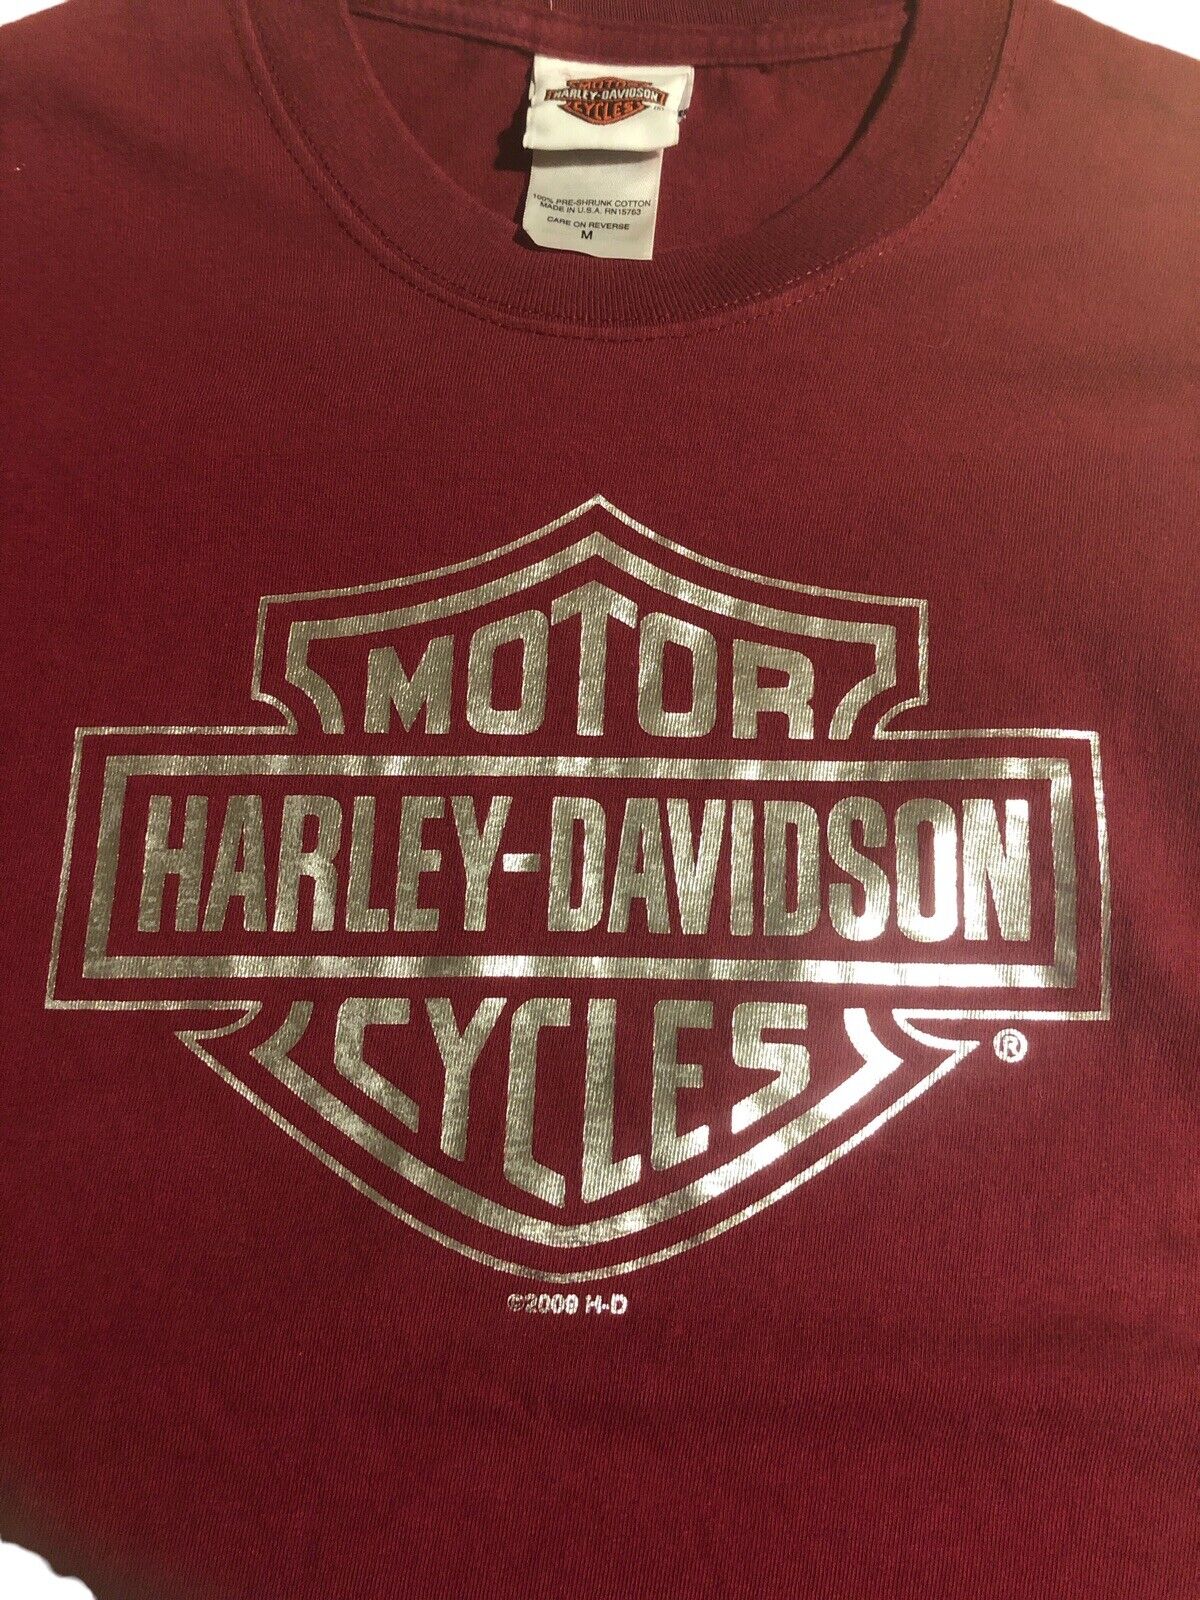 Harley Davidson T-Shirt- Med-Pre-owned. HD Of Jamestown, NY, GC, $25-free Ship.